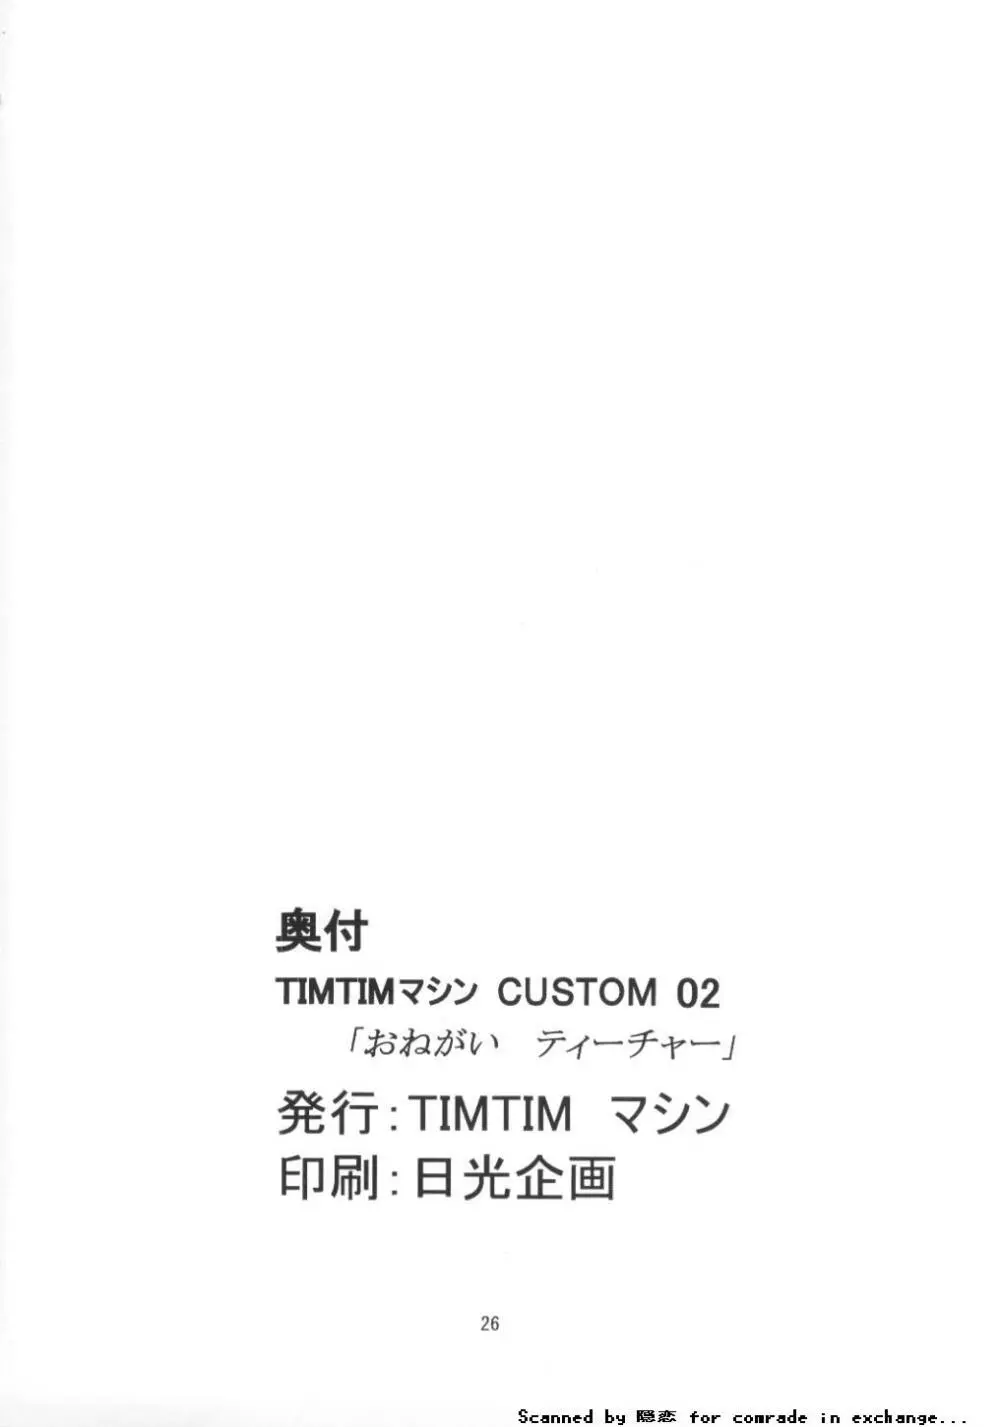 TIMTIMマシン CUSTOM 02 サマースペシャル 2002 25ページ